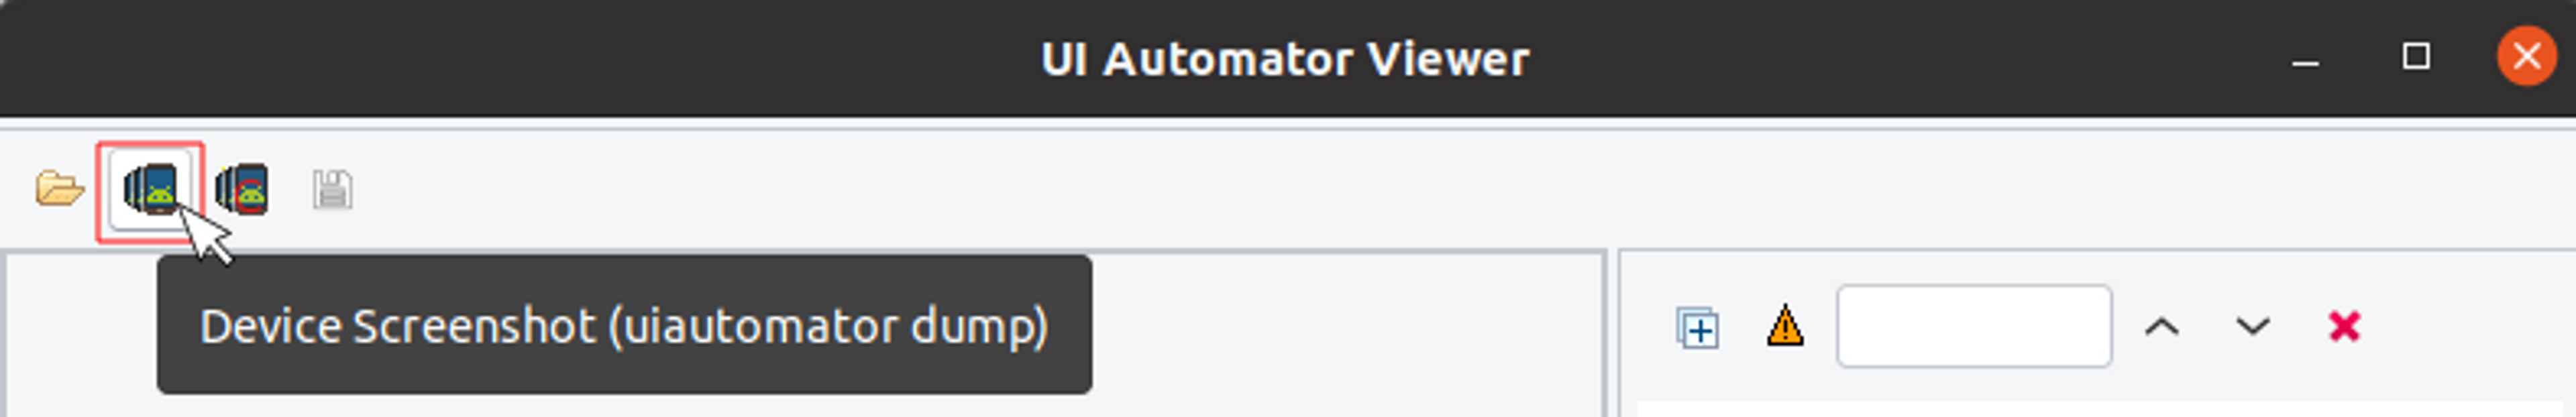 UI automator viewer